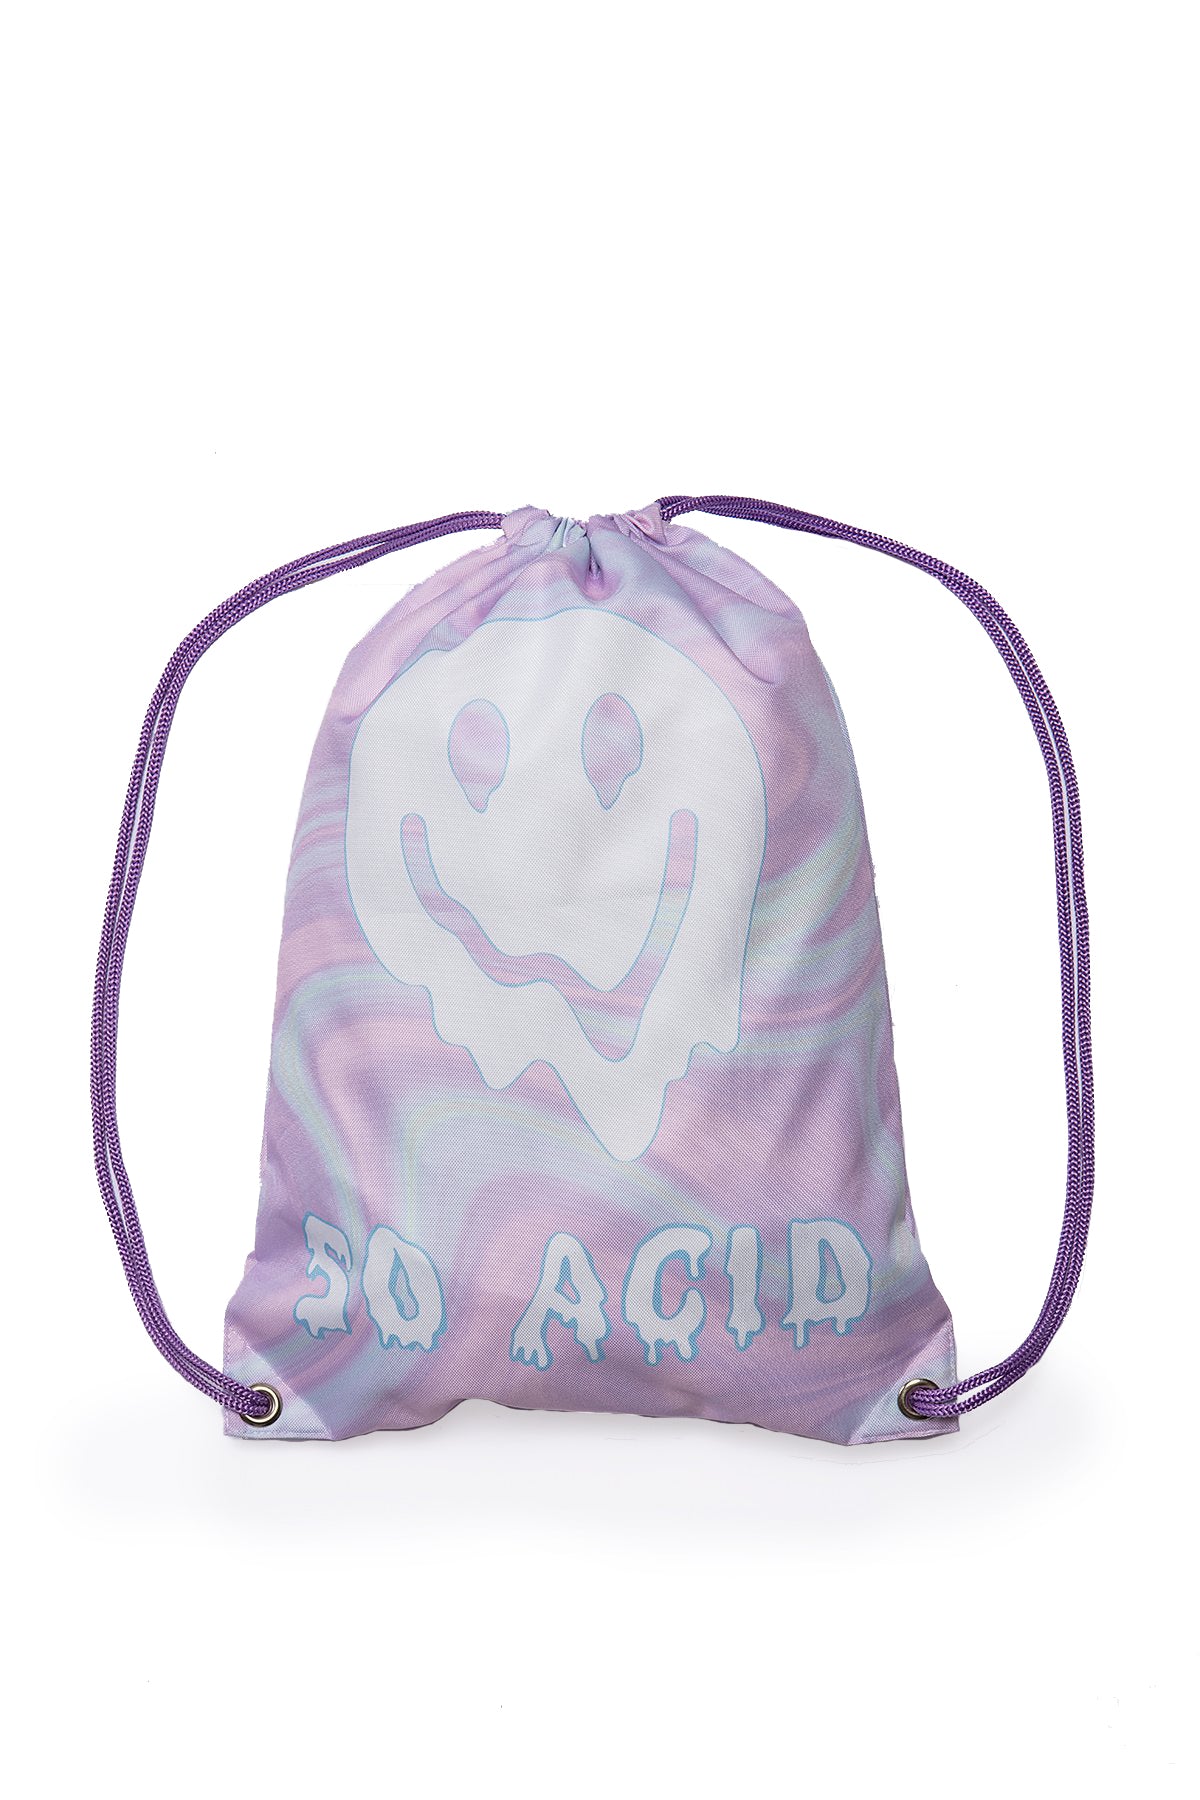 So Acid Backpacks